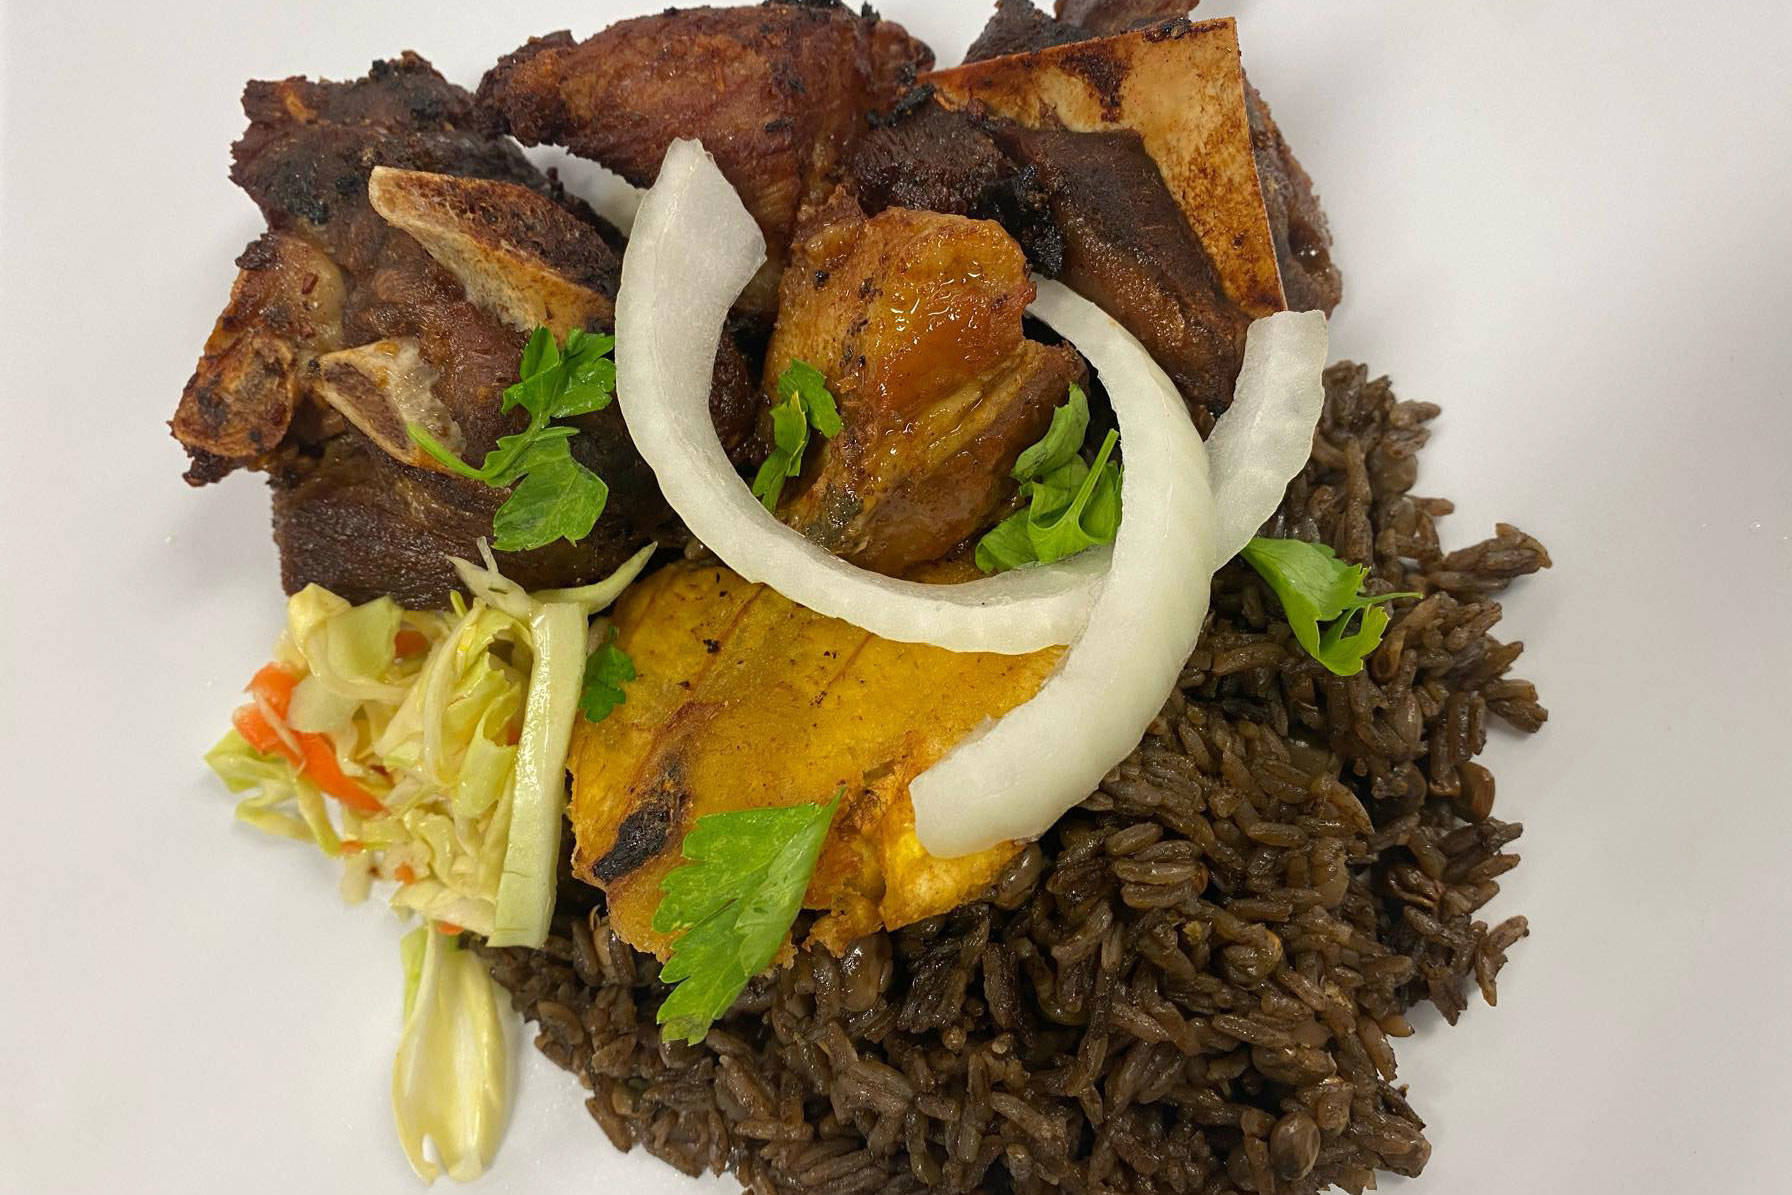 Griot (fried pork dish) photo courtesy of Juju’s Caribbean Kitchen